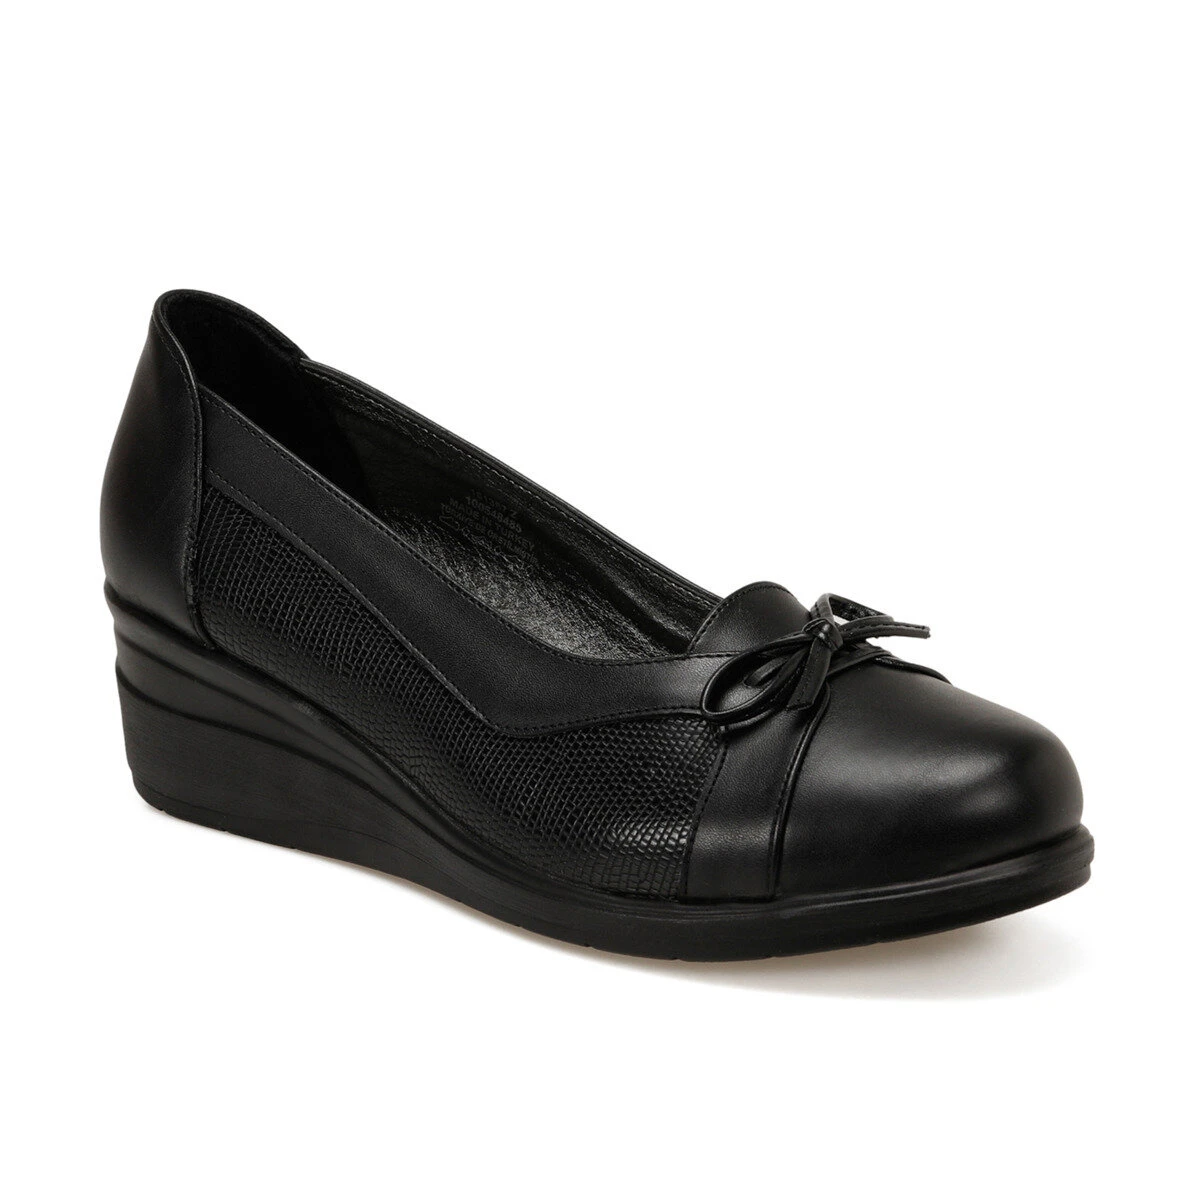 Admisión Recuerdo Desnatar Zapatillas cómodas para mujer, zapatos negros, 161387|Zapatos vulcanizados  de mujer| - AliExpress